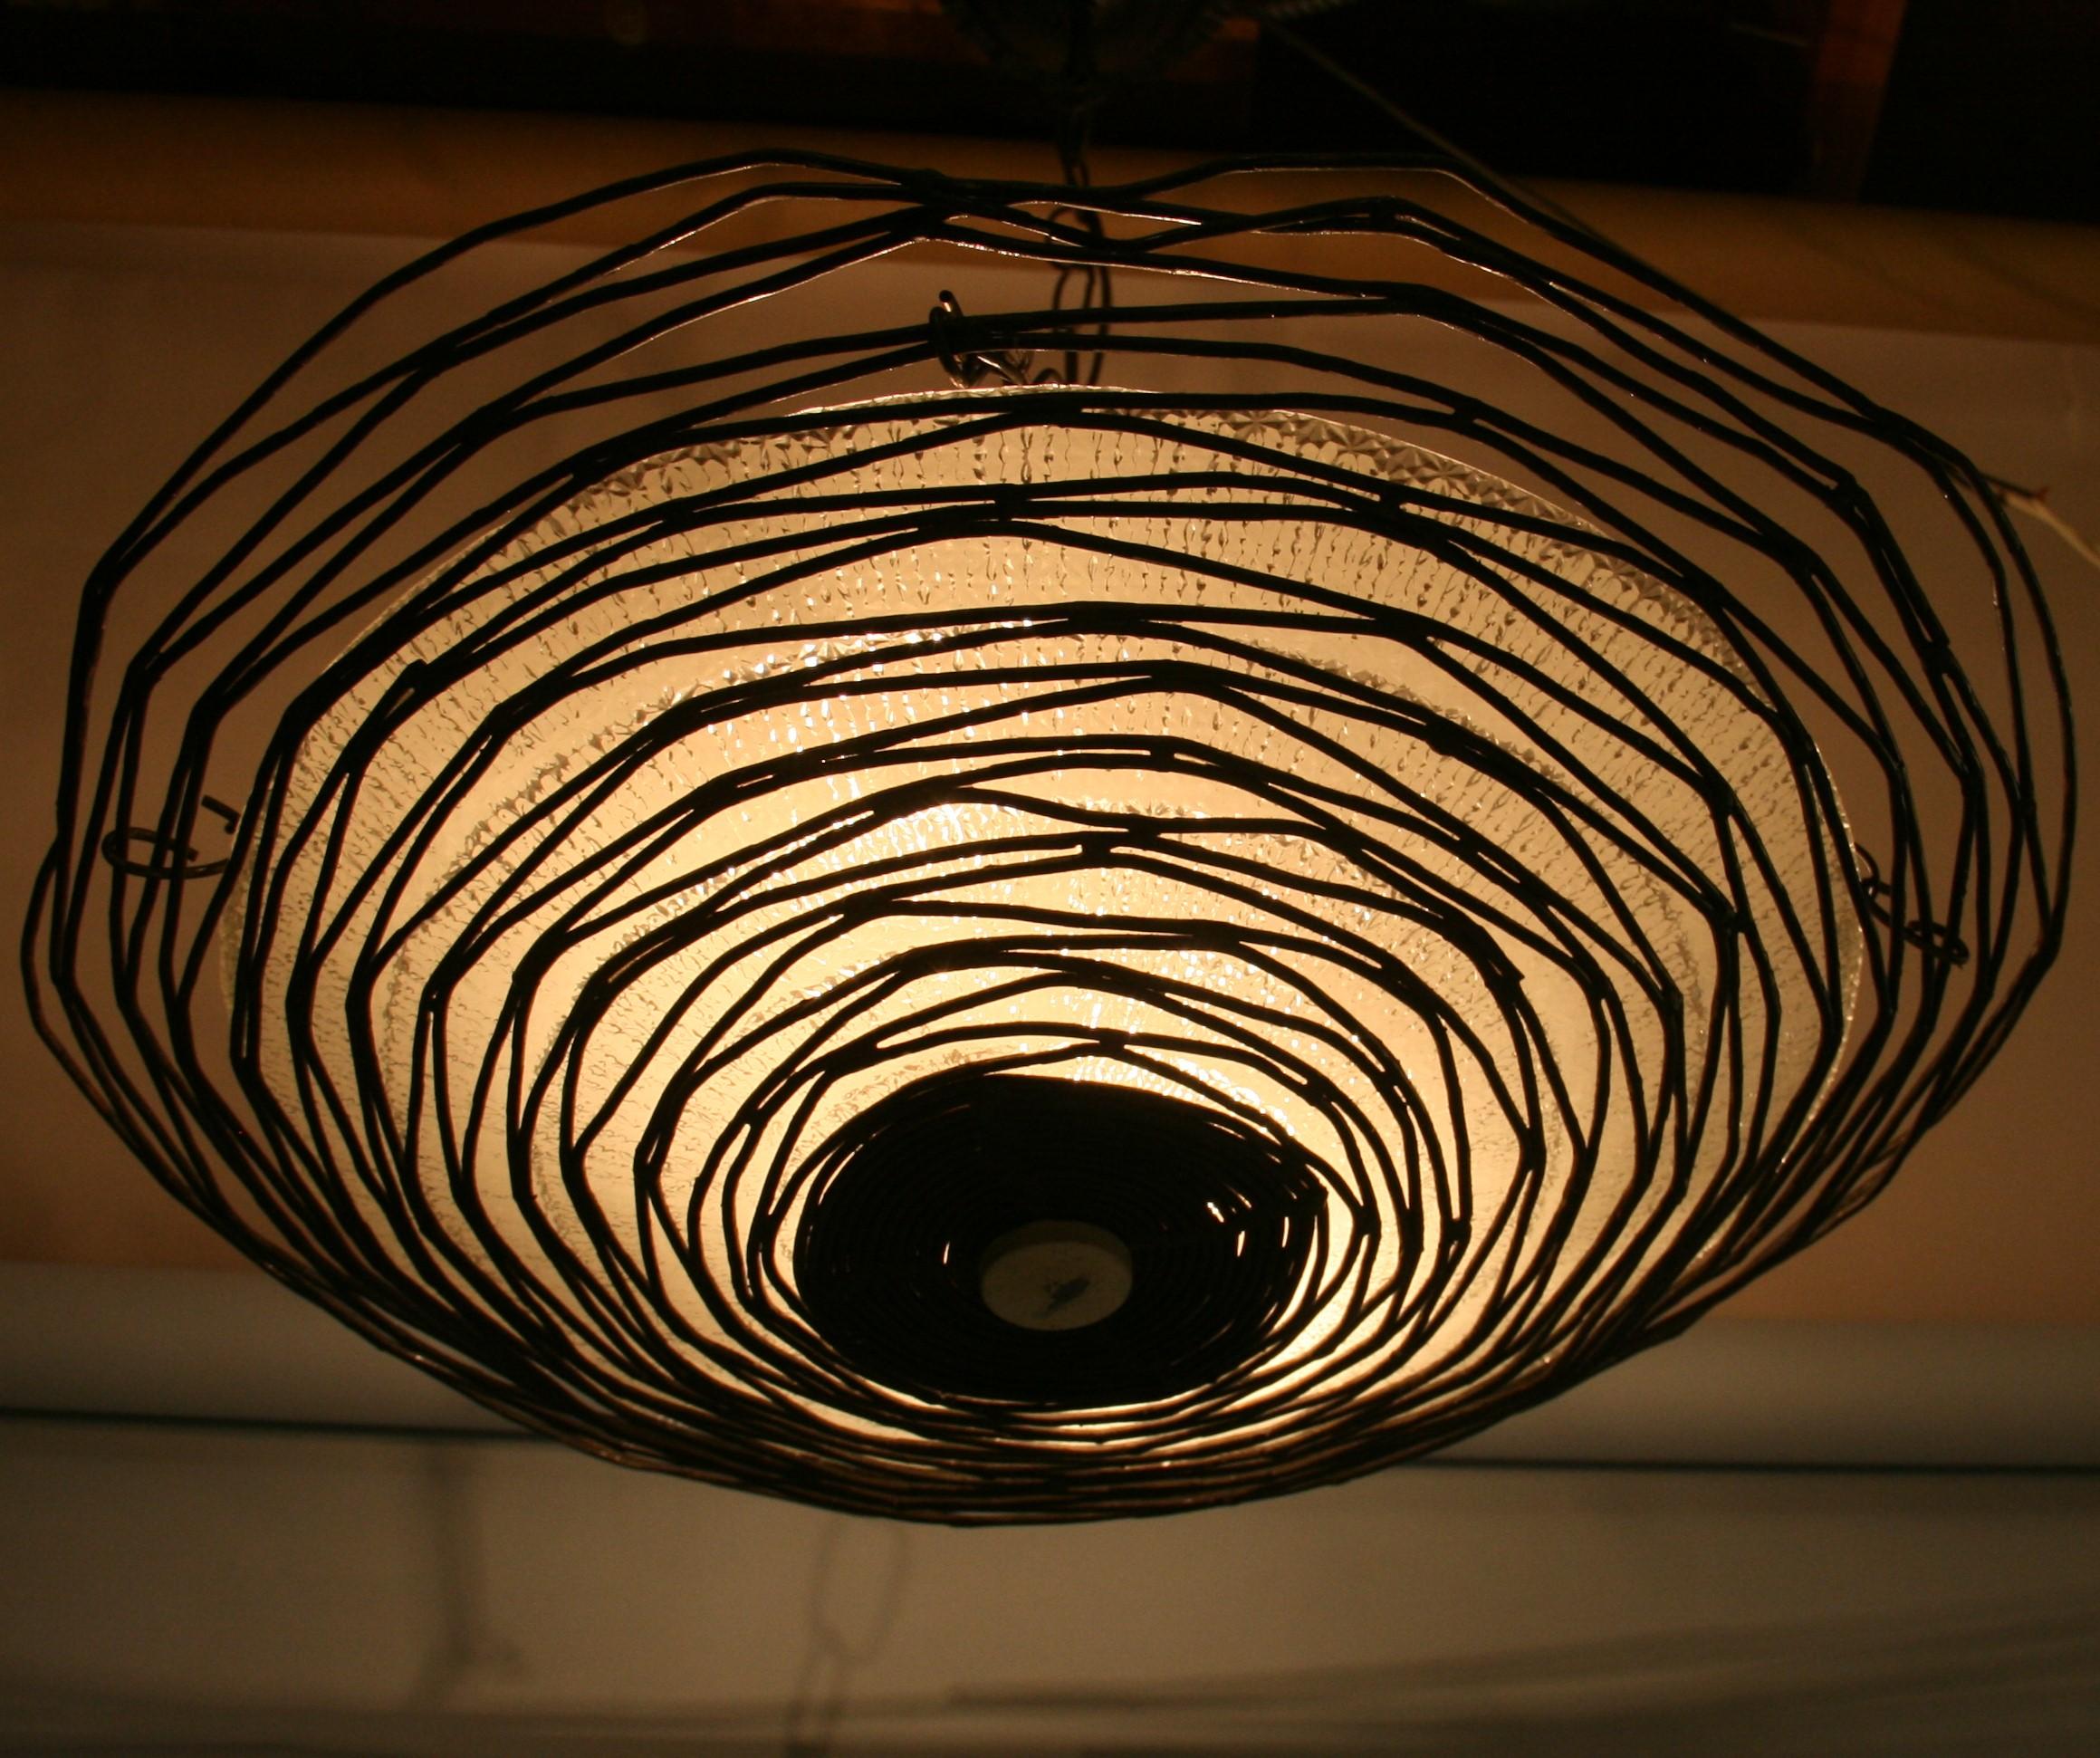 1490 Spiders web hand made metal and glass 2 light pendant
Takes 2 60 watt candleabra based bulbs